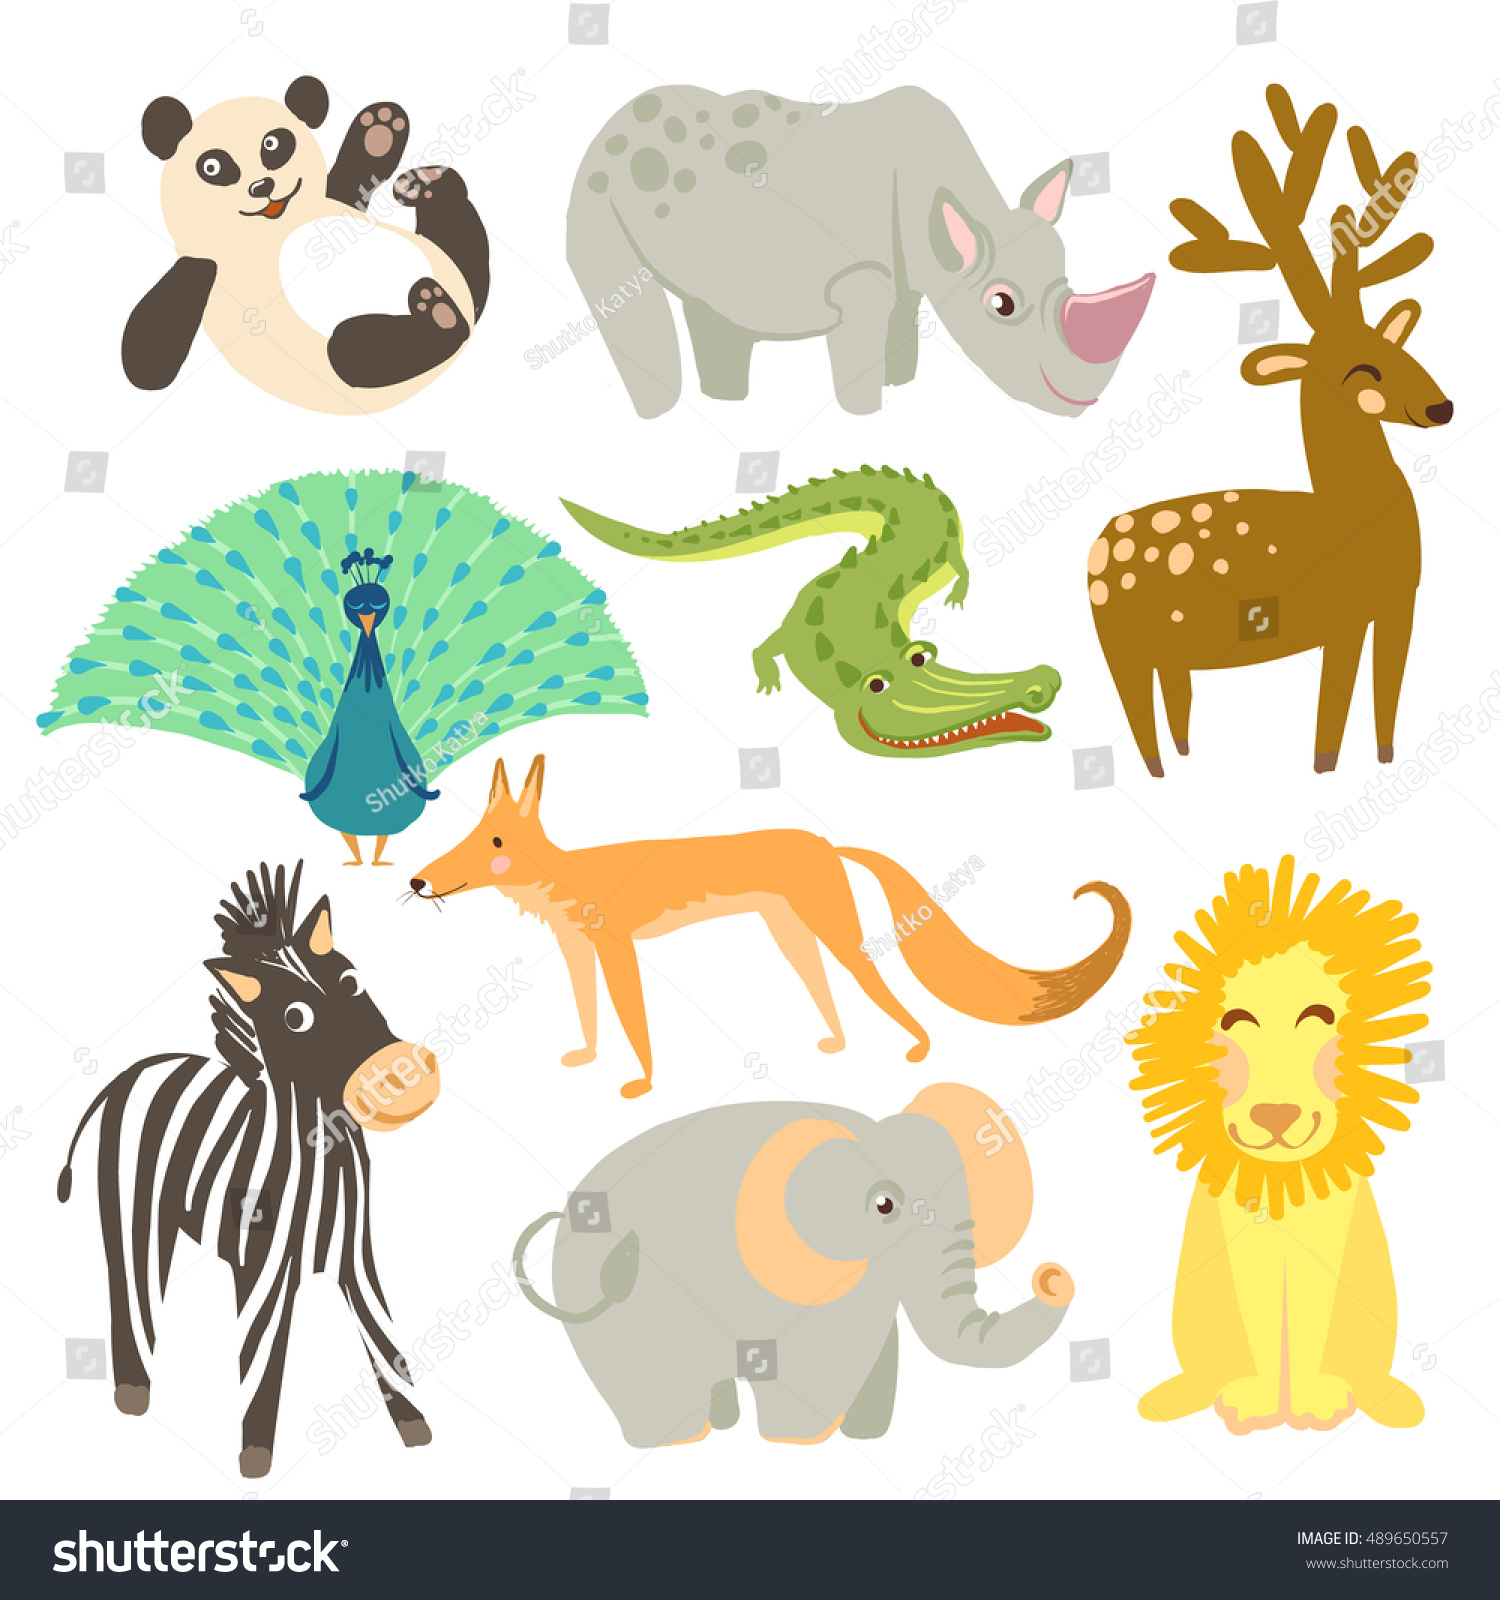 Vector Illustration Of Animal. Zoo Cute Animals - 489650557 : Shutterstock